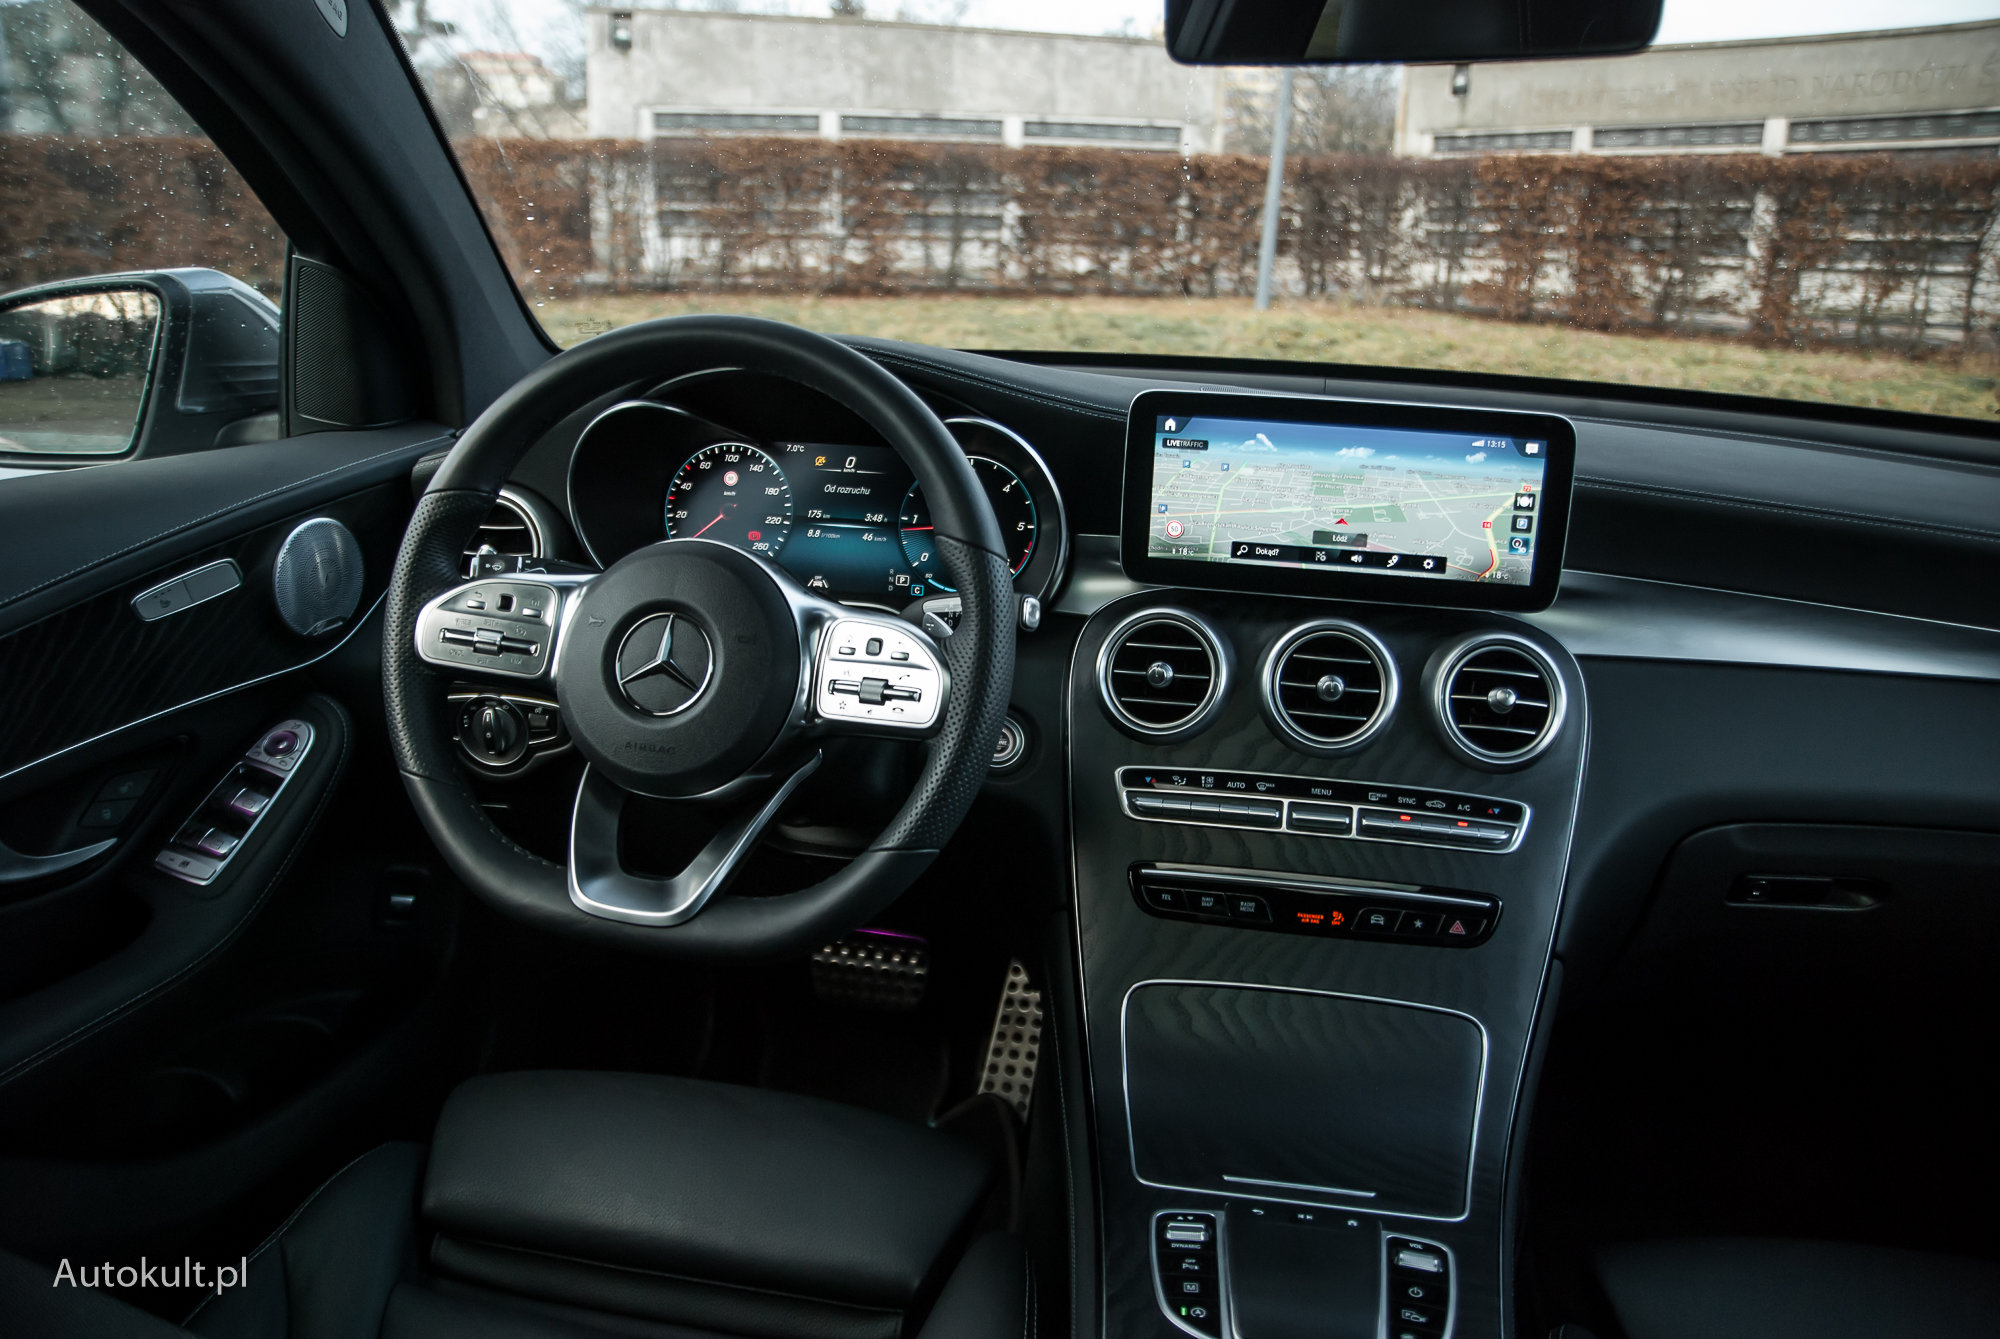 Mercedes GLC Coupe 300d 4Matic test, opinia, dane